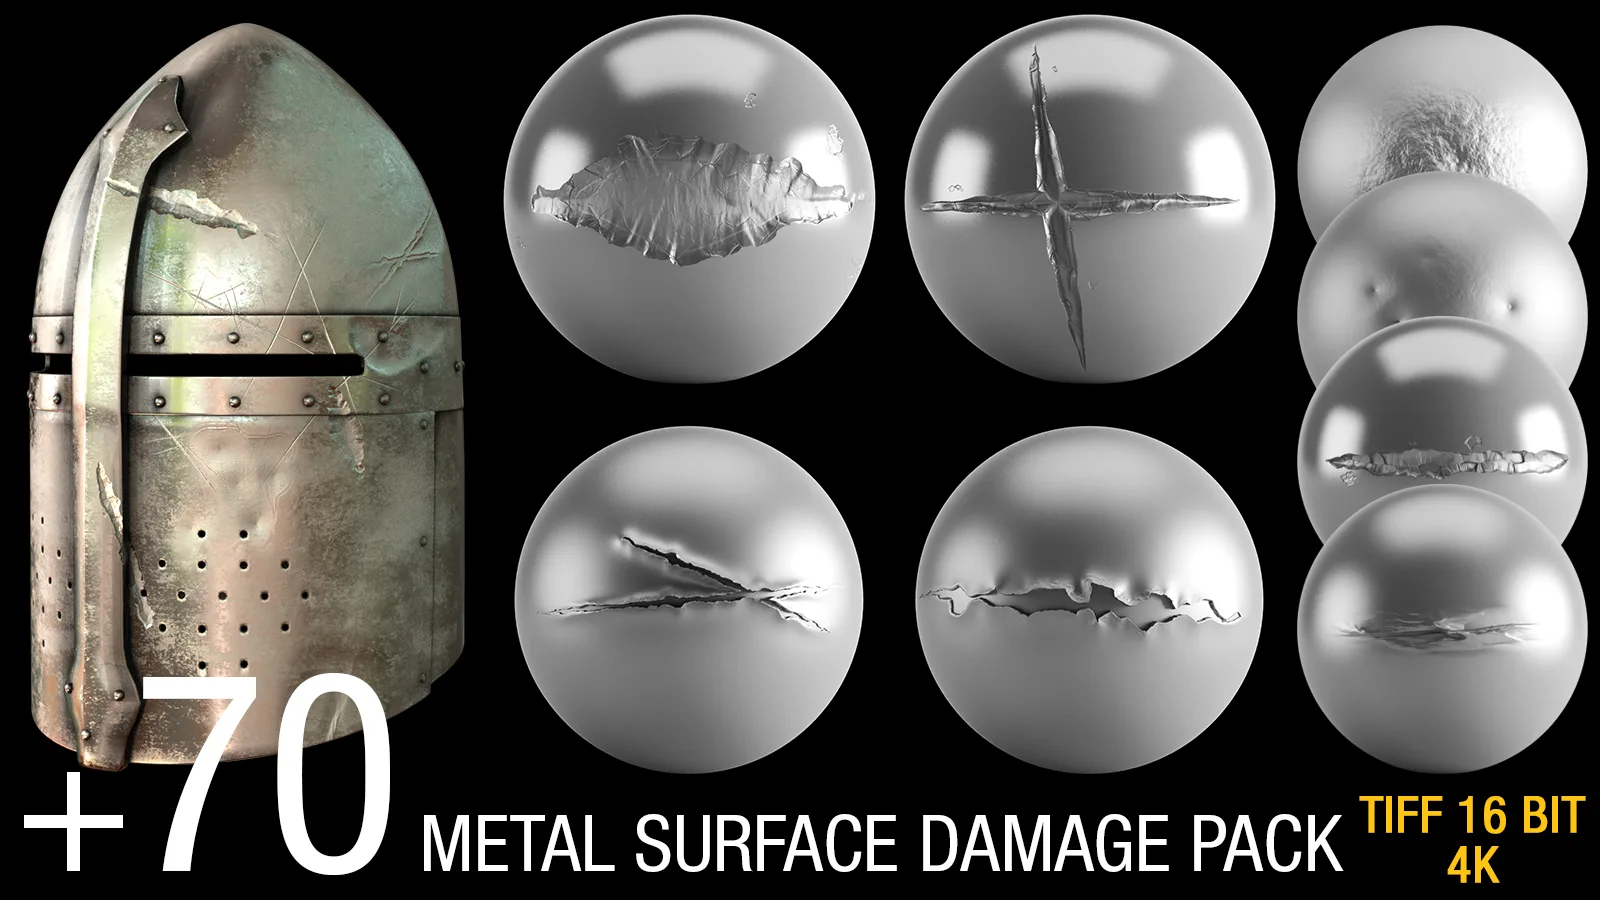 +70 Metal Surface Damage ALPHA PACK (tiff 16bit, 4K)